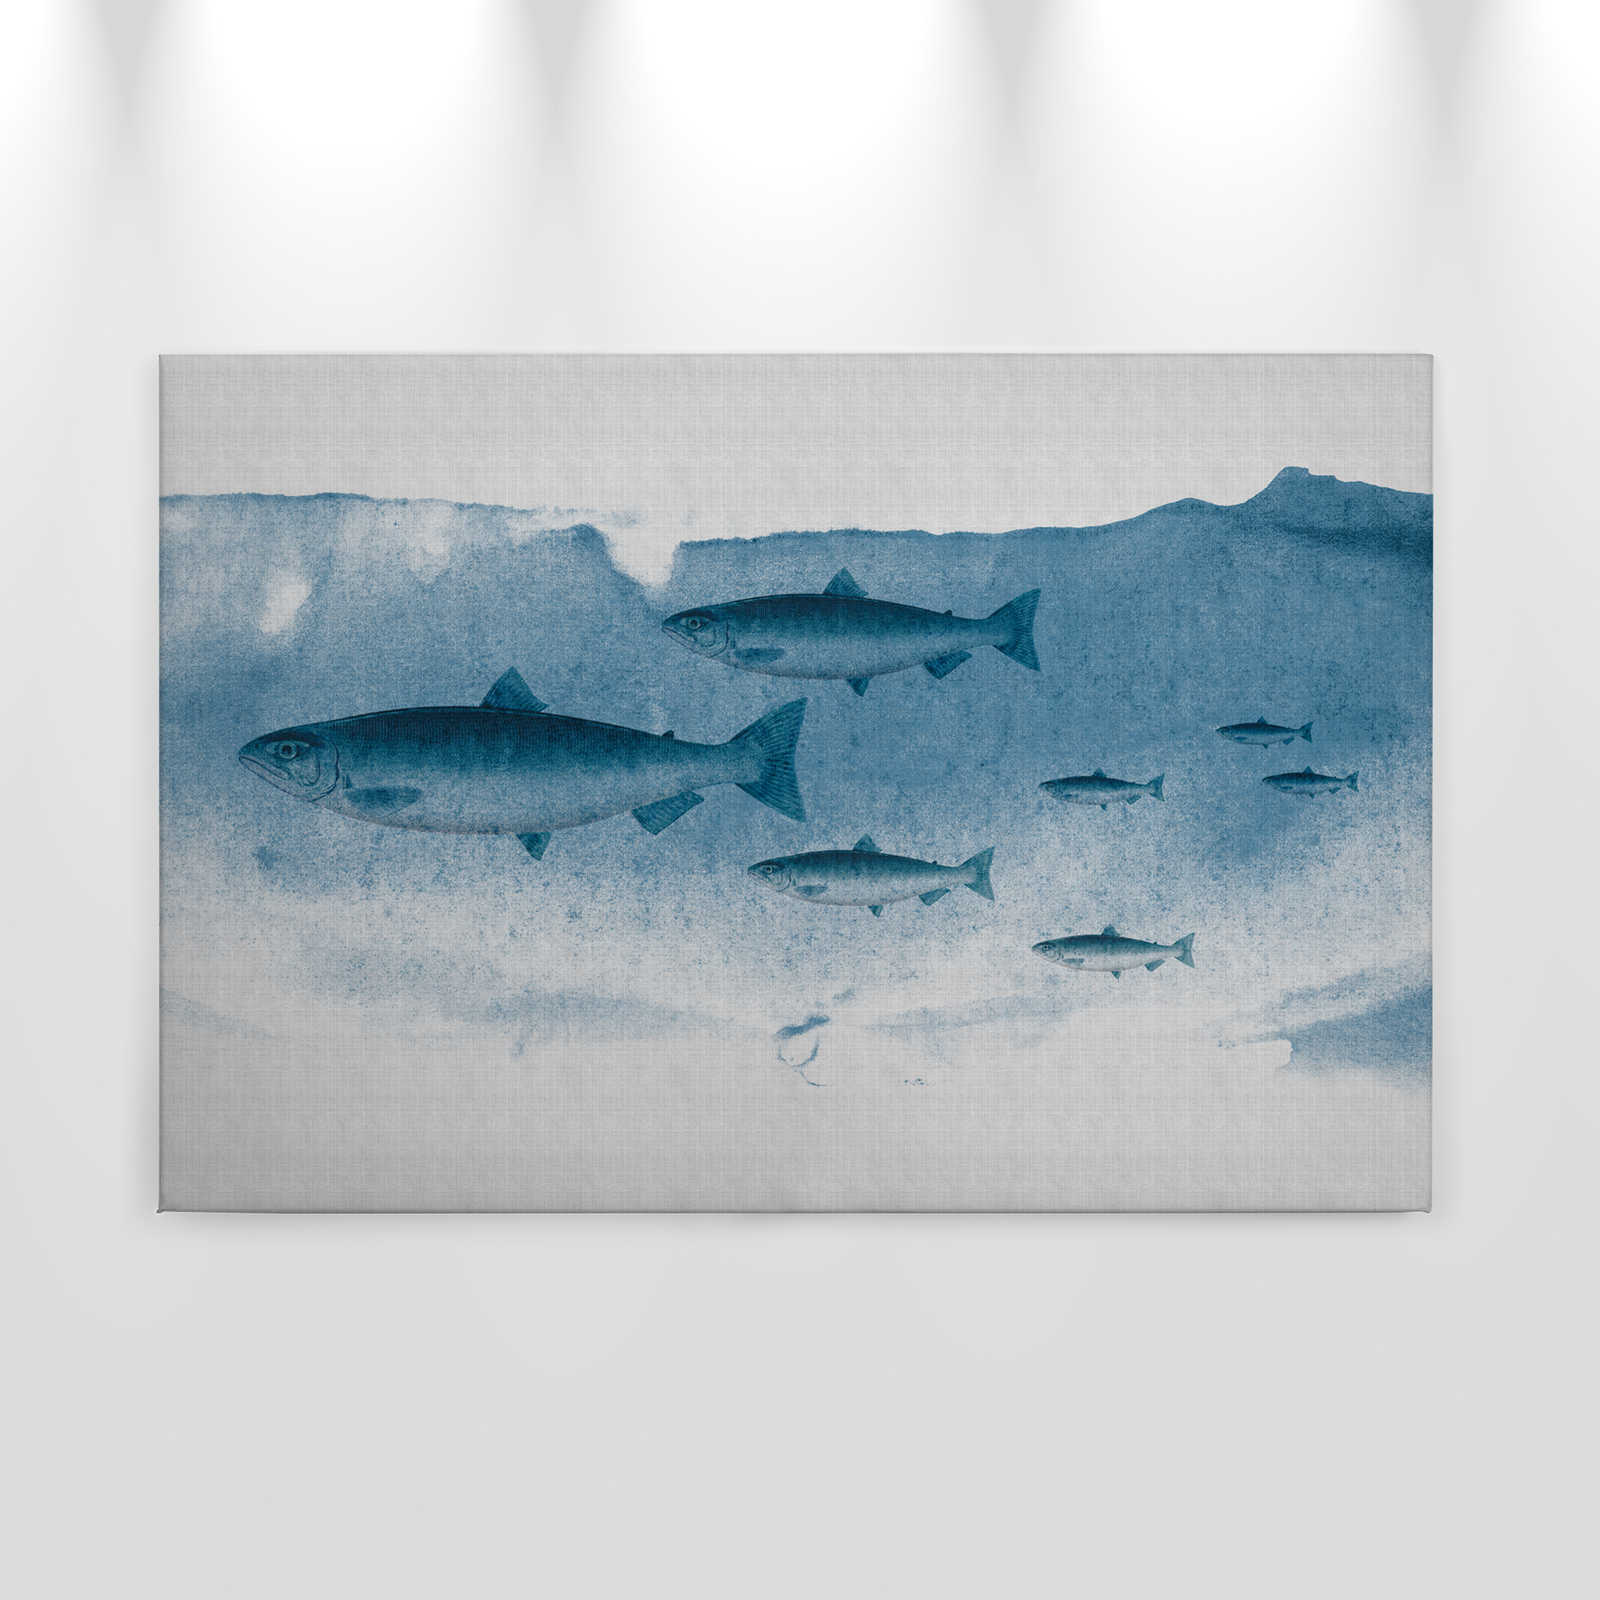             Into the blue 1 - Acuarela de pez en azul como cuadro de lienzo en estructura de lino natural - 0,90 m x 0,60 m
        